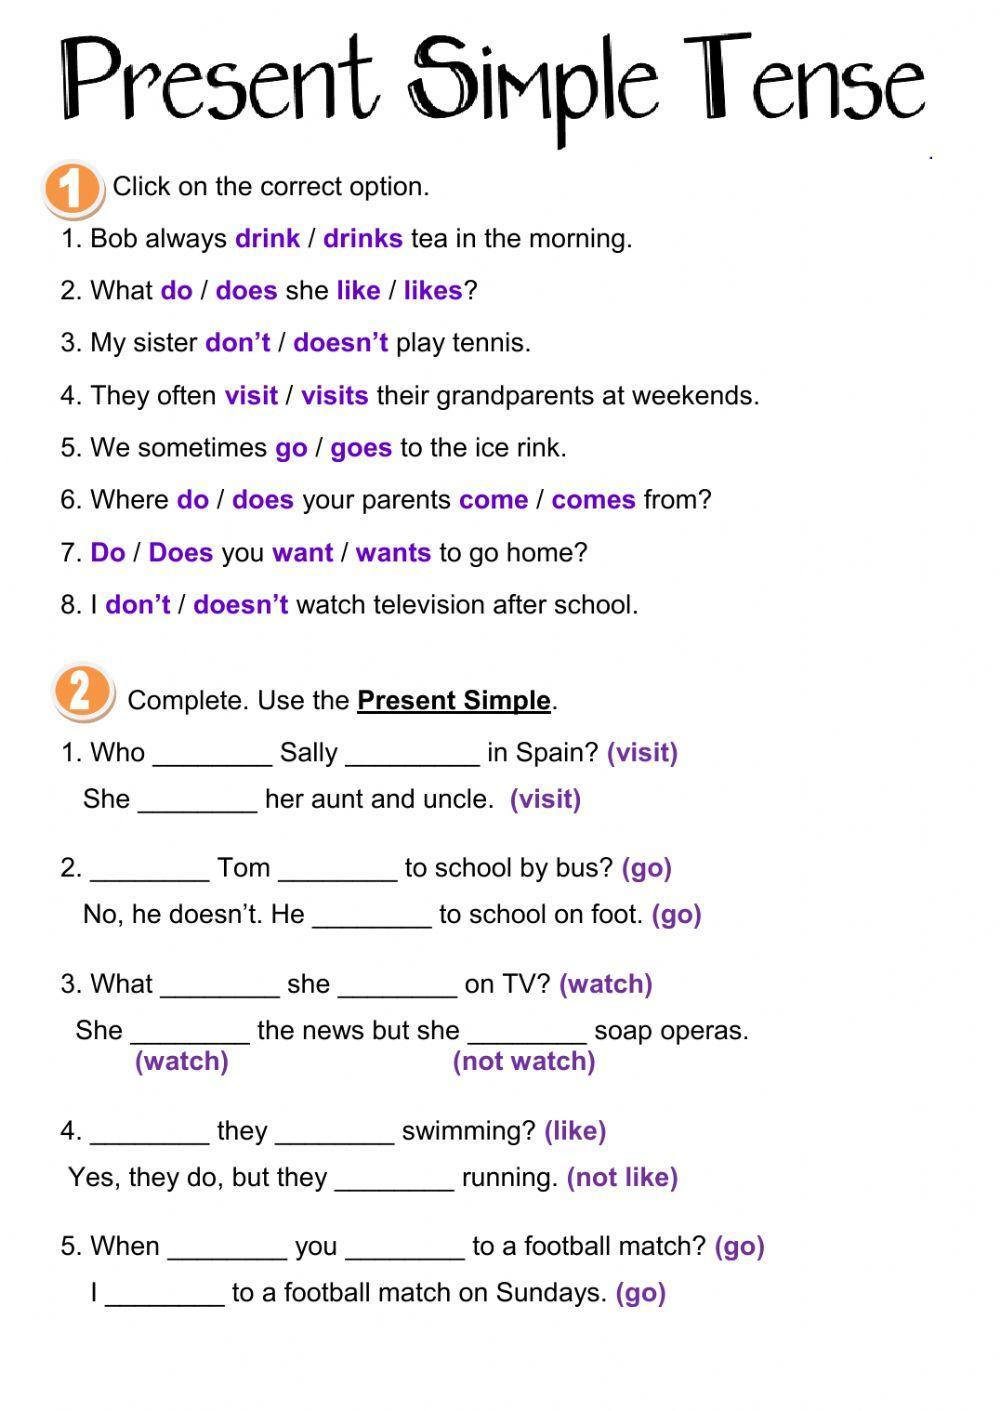 Present Simple Tense interactive worksheet | Live Worksheets